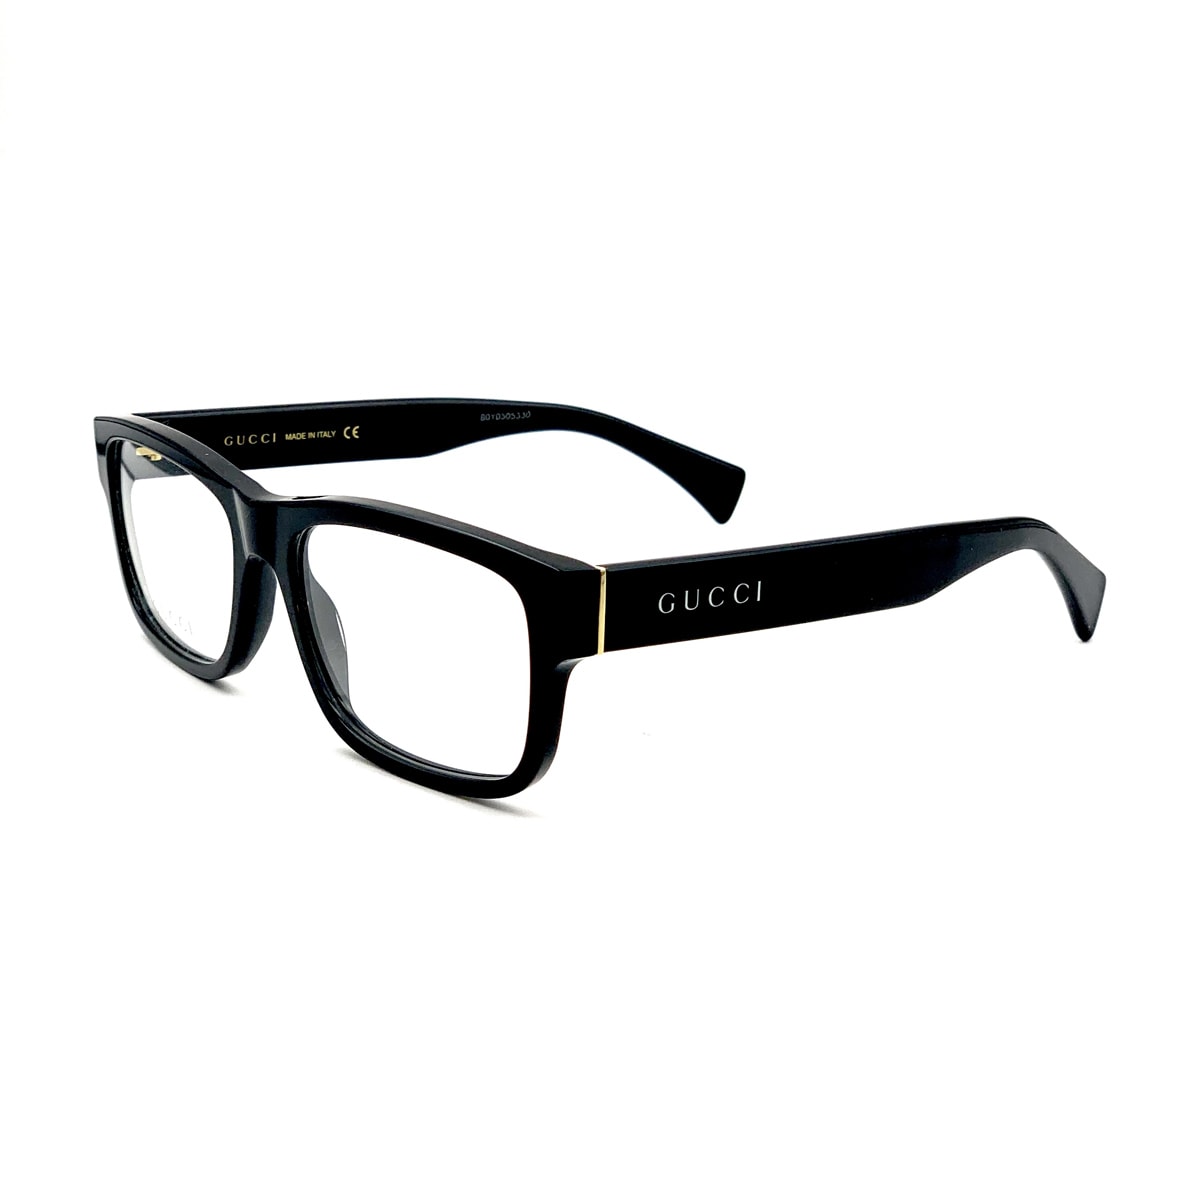 Gucci Eyewear Gg1141o Glasses